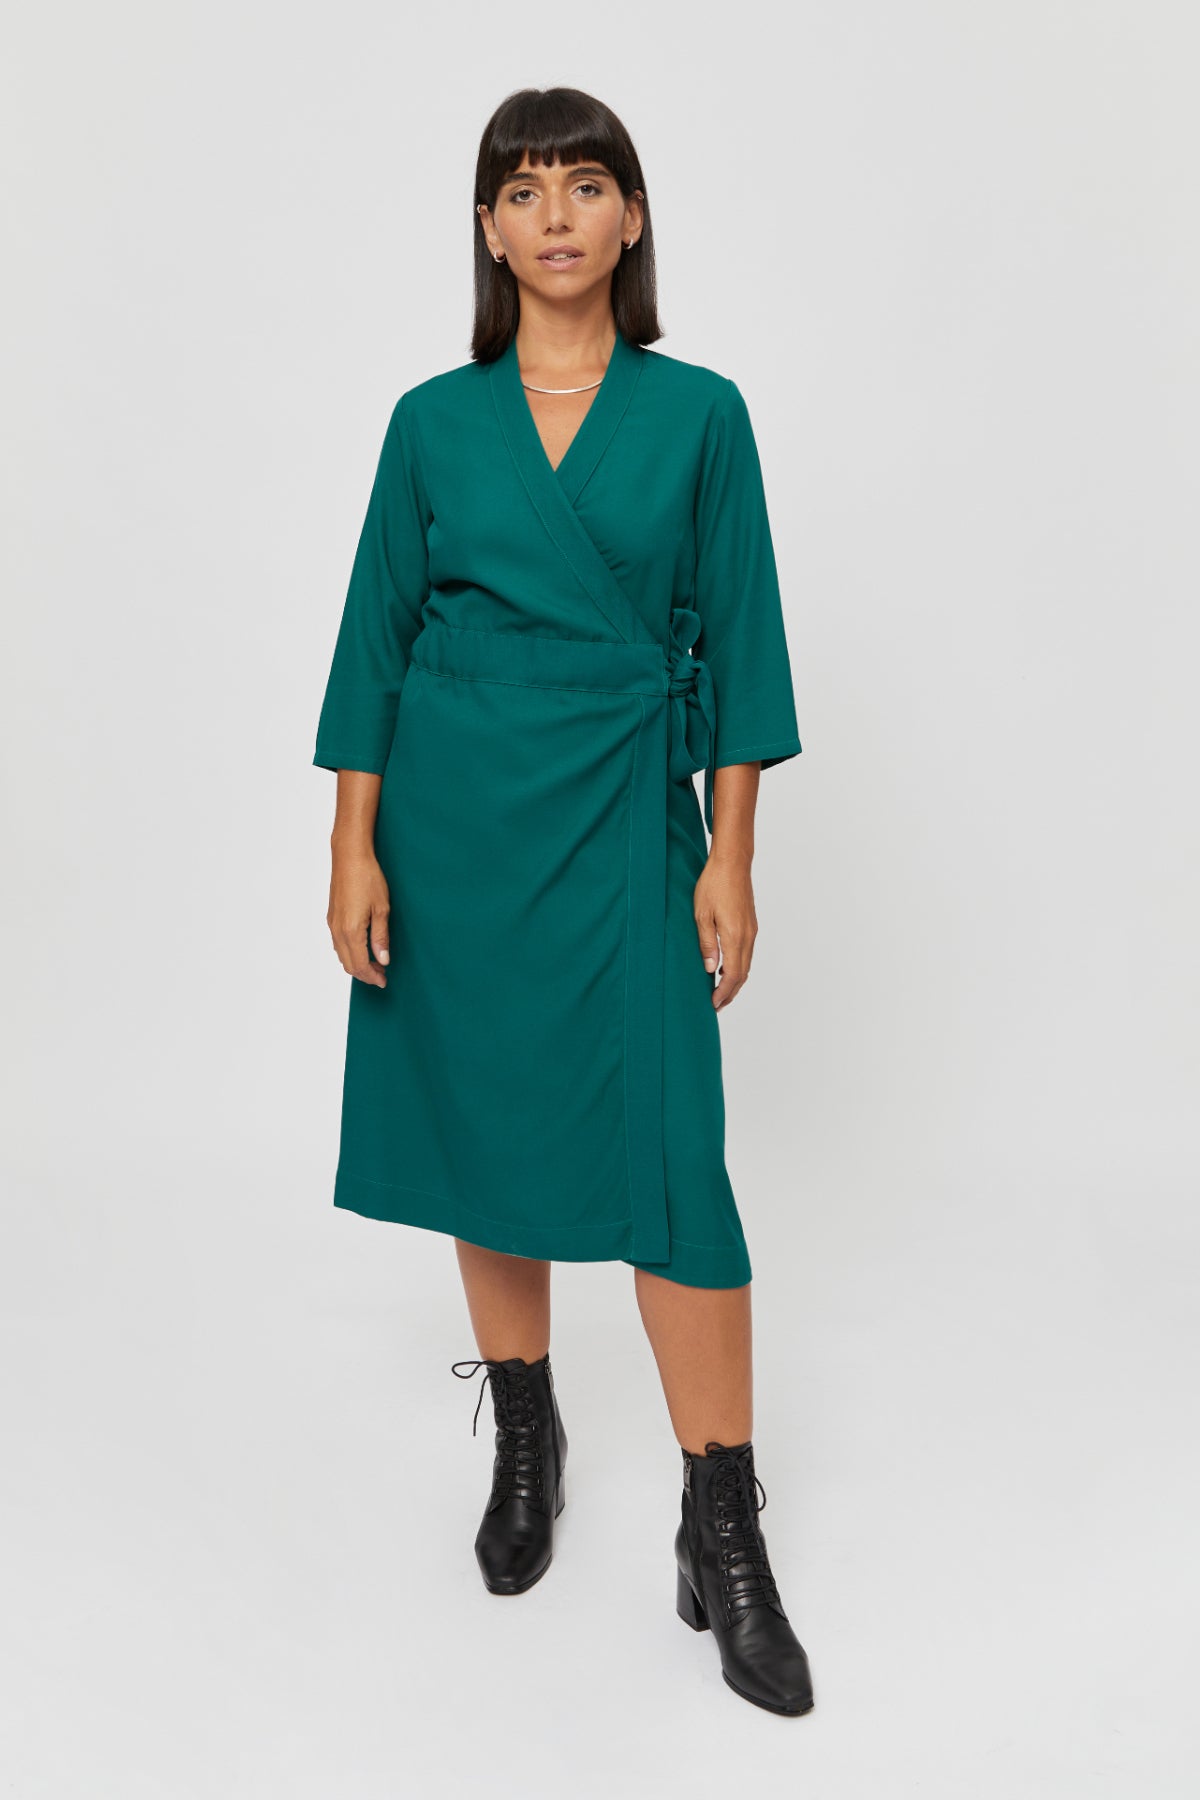 Green Wrap Dress SANDRA. Midi Formal V Neck Wrap Dress · Cocktail and Evening Wrap Dress - AYANI